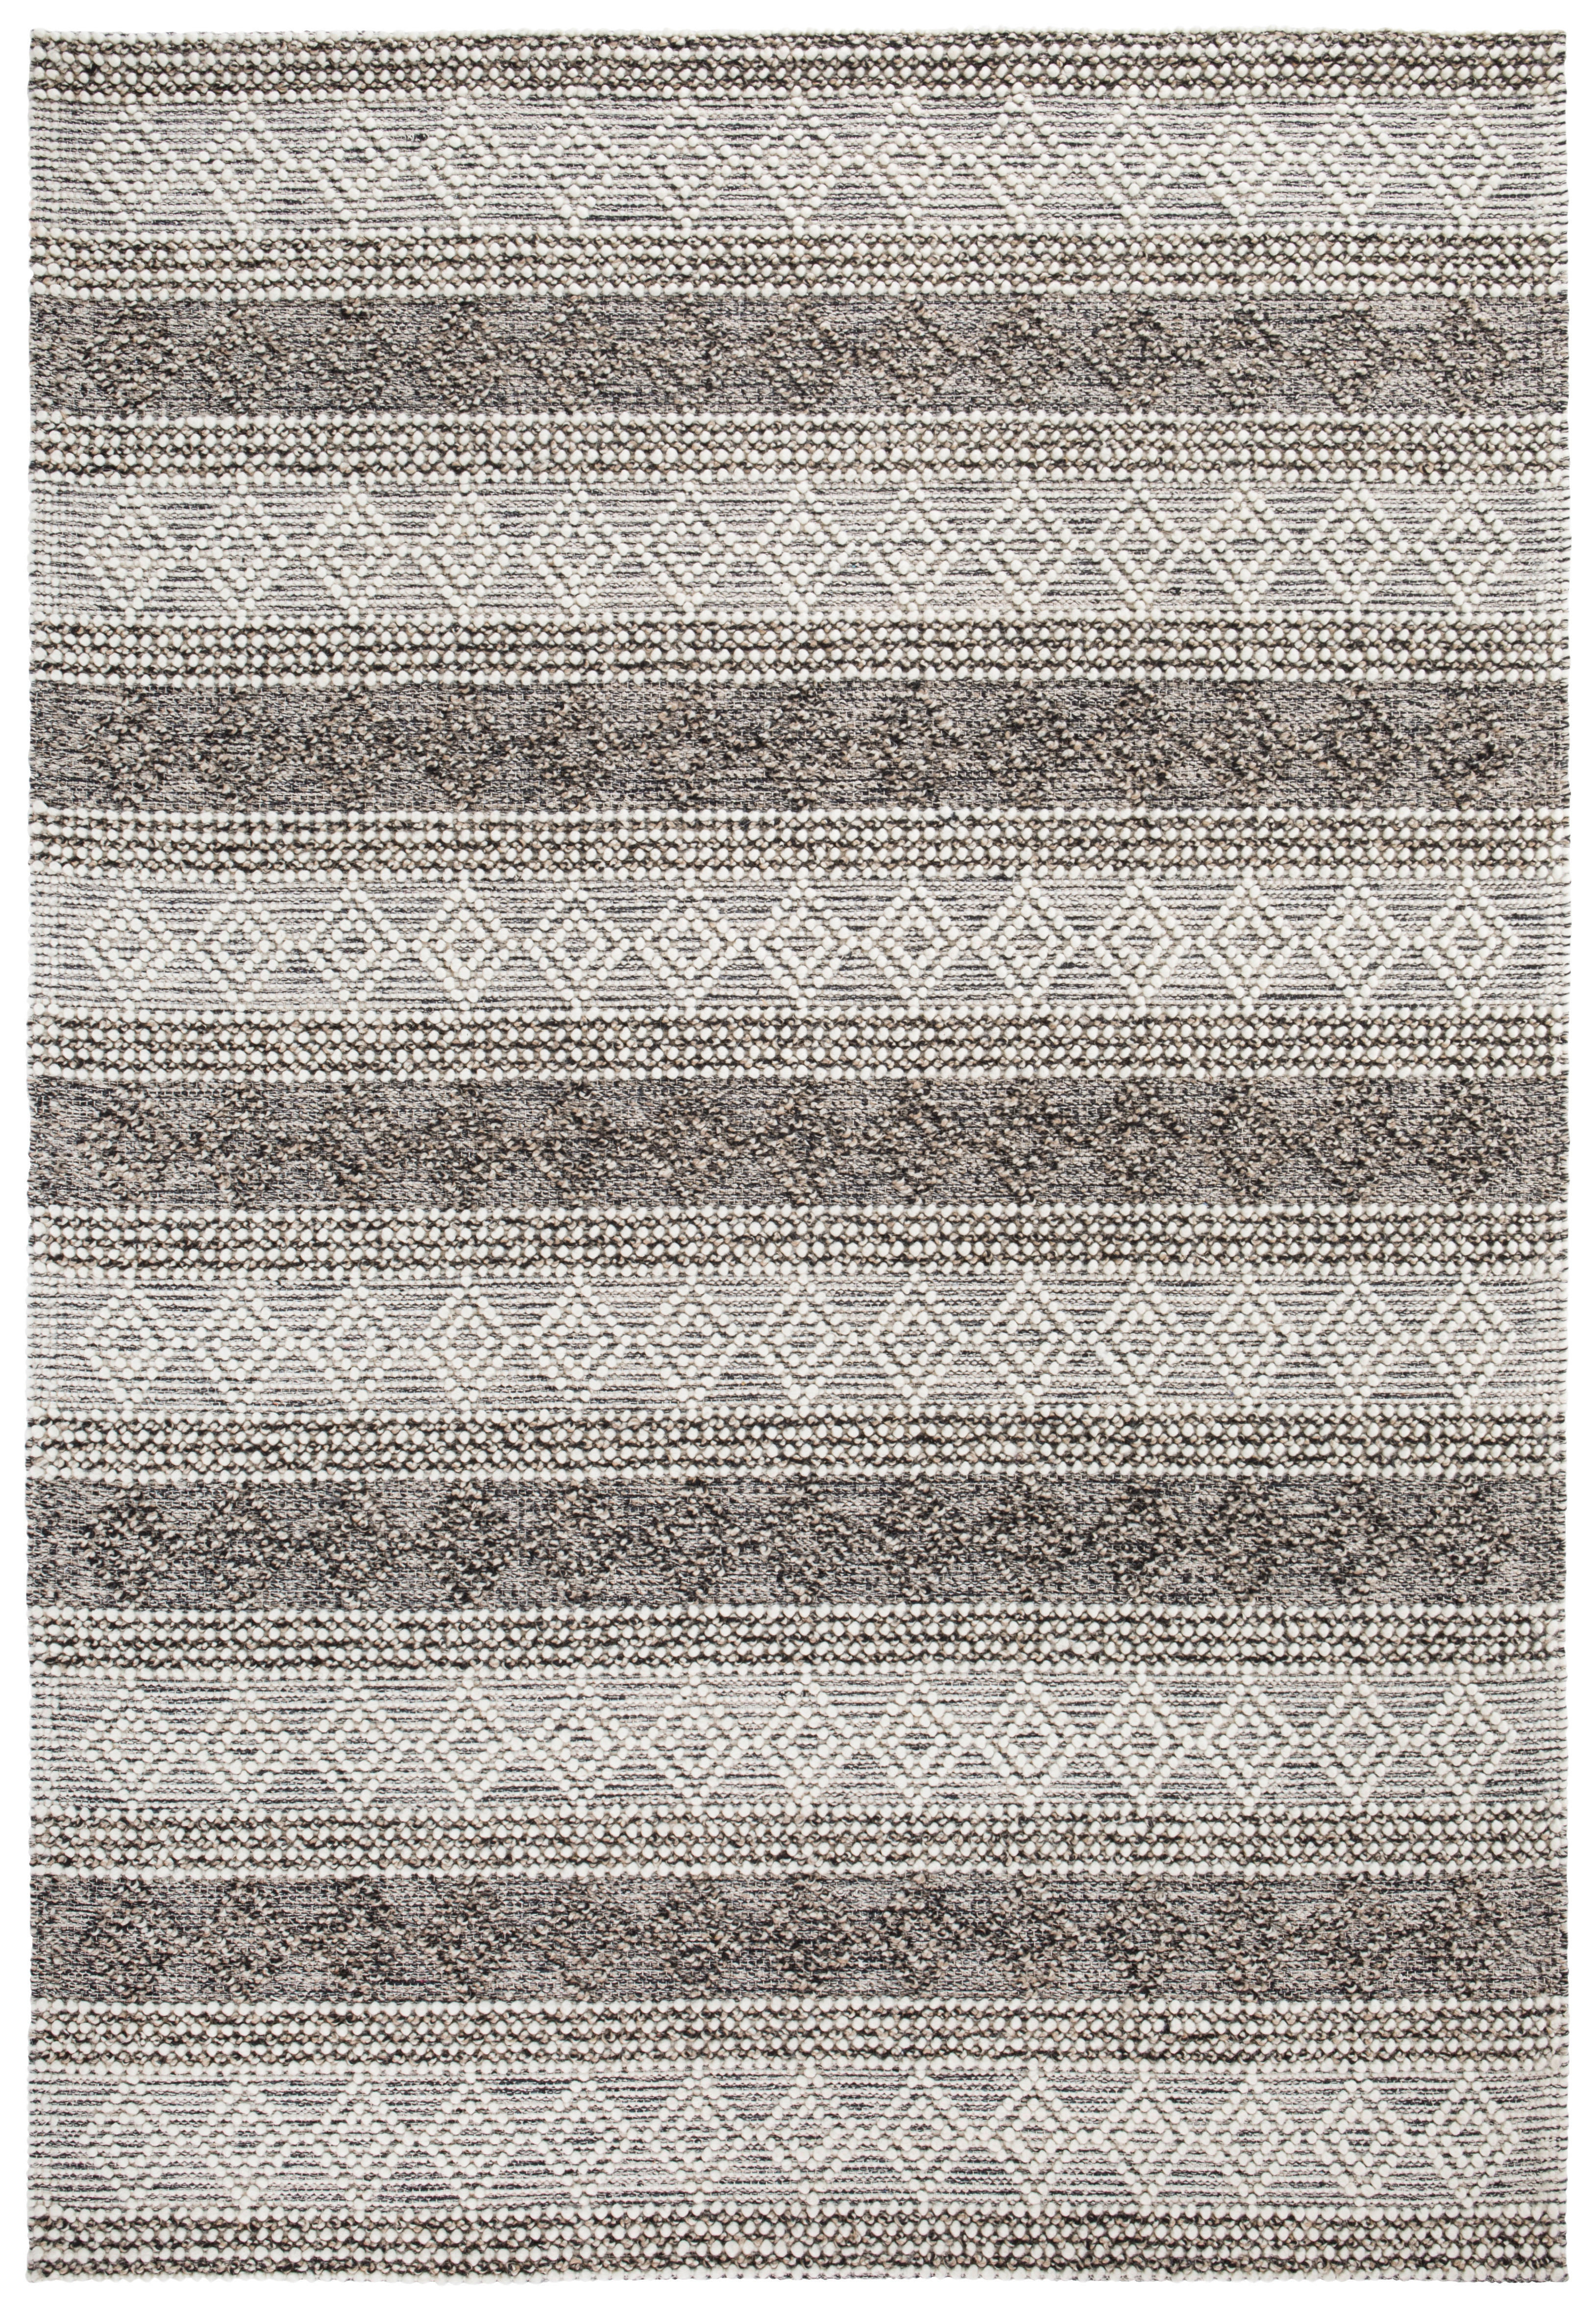 WOLLTEPPICH - Multicolor/Braun, Design, Naturmaterialien/Textil (70/140cm) - Linea Natura